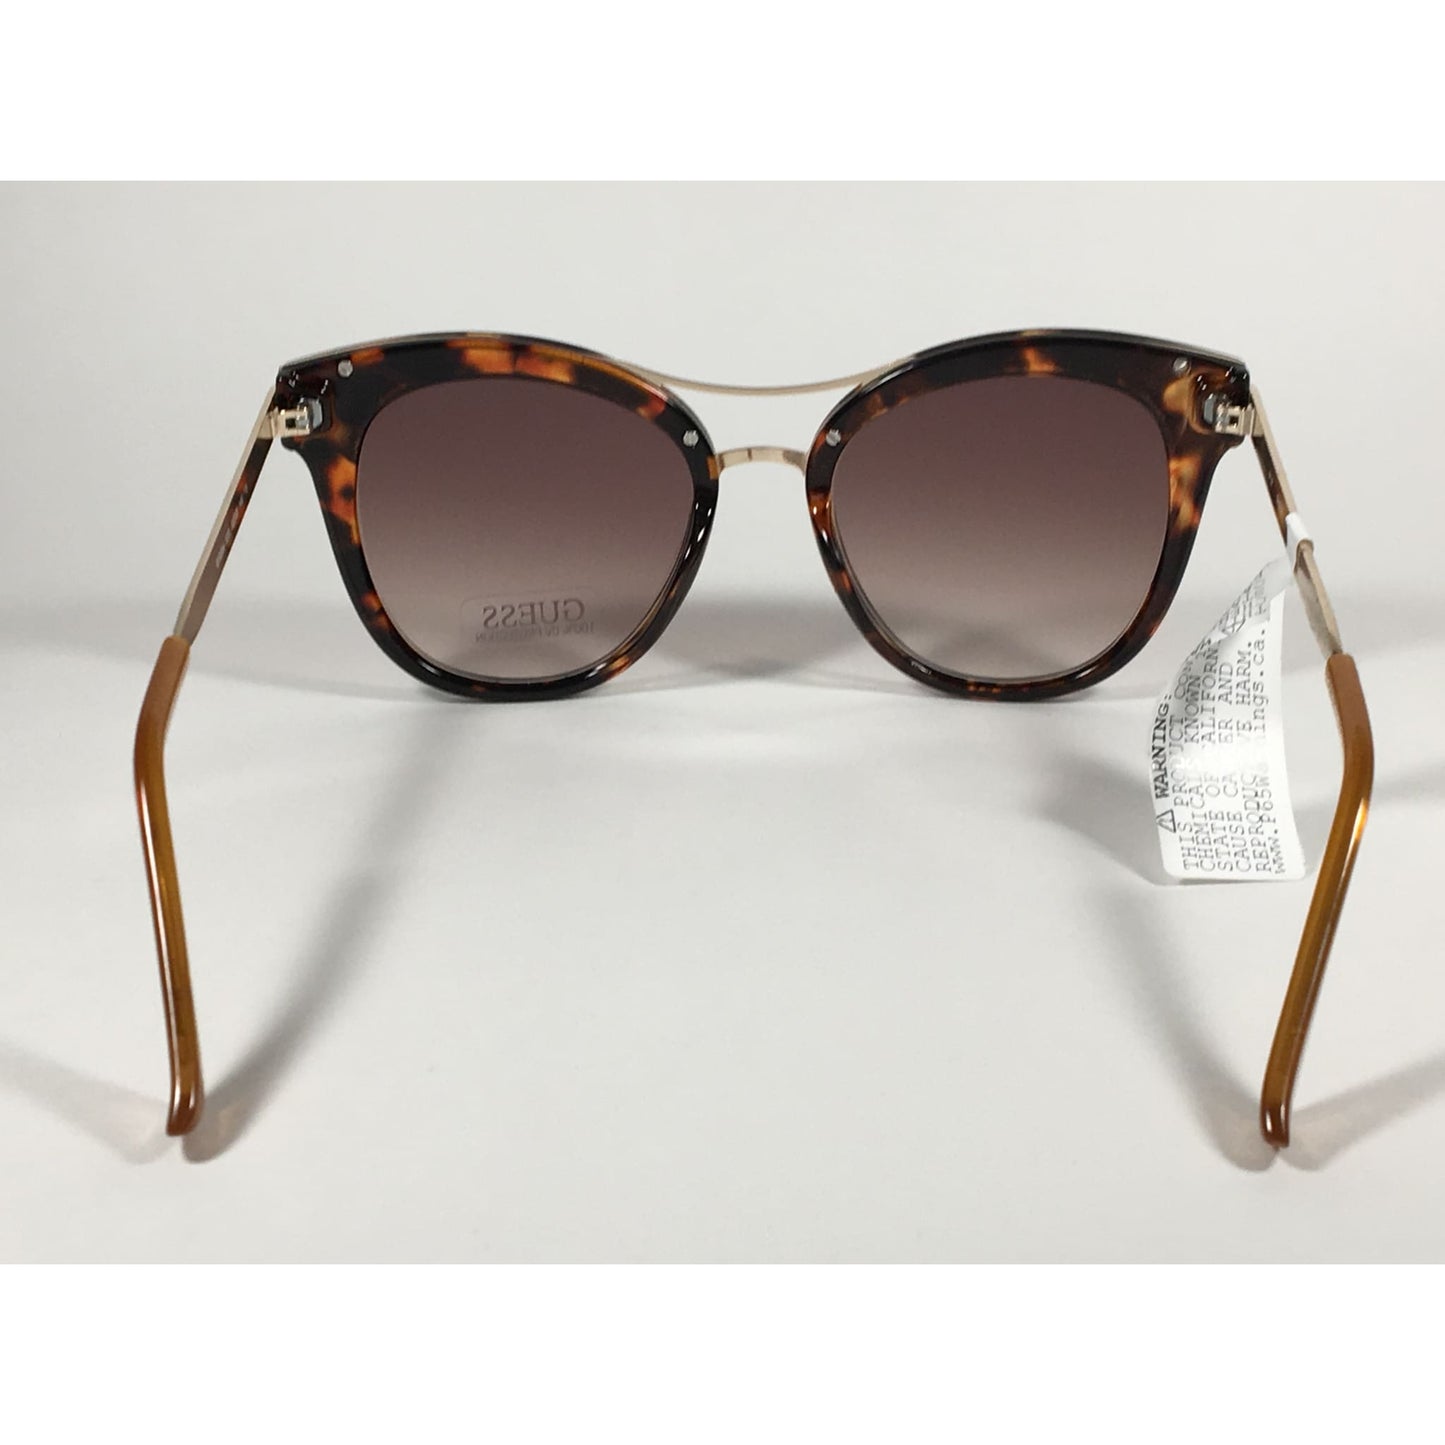 Guess Round Cat Eye Sunglasses Gold Brown Tortoise Frame Brown Gradient Lens GF0304 52G - Sunglasses